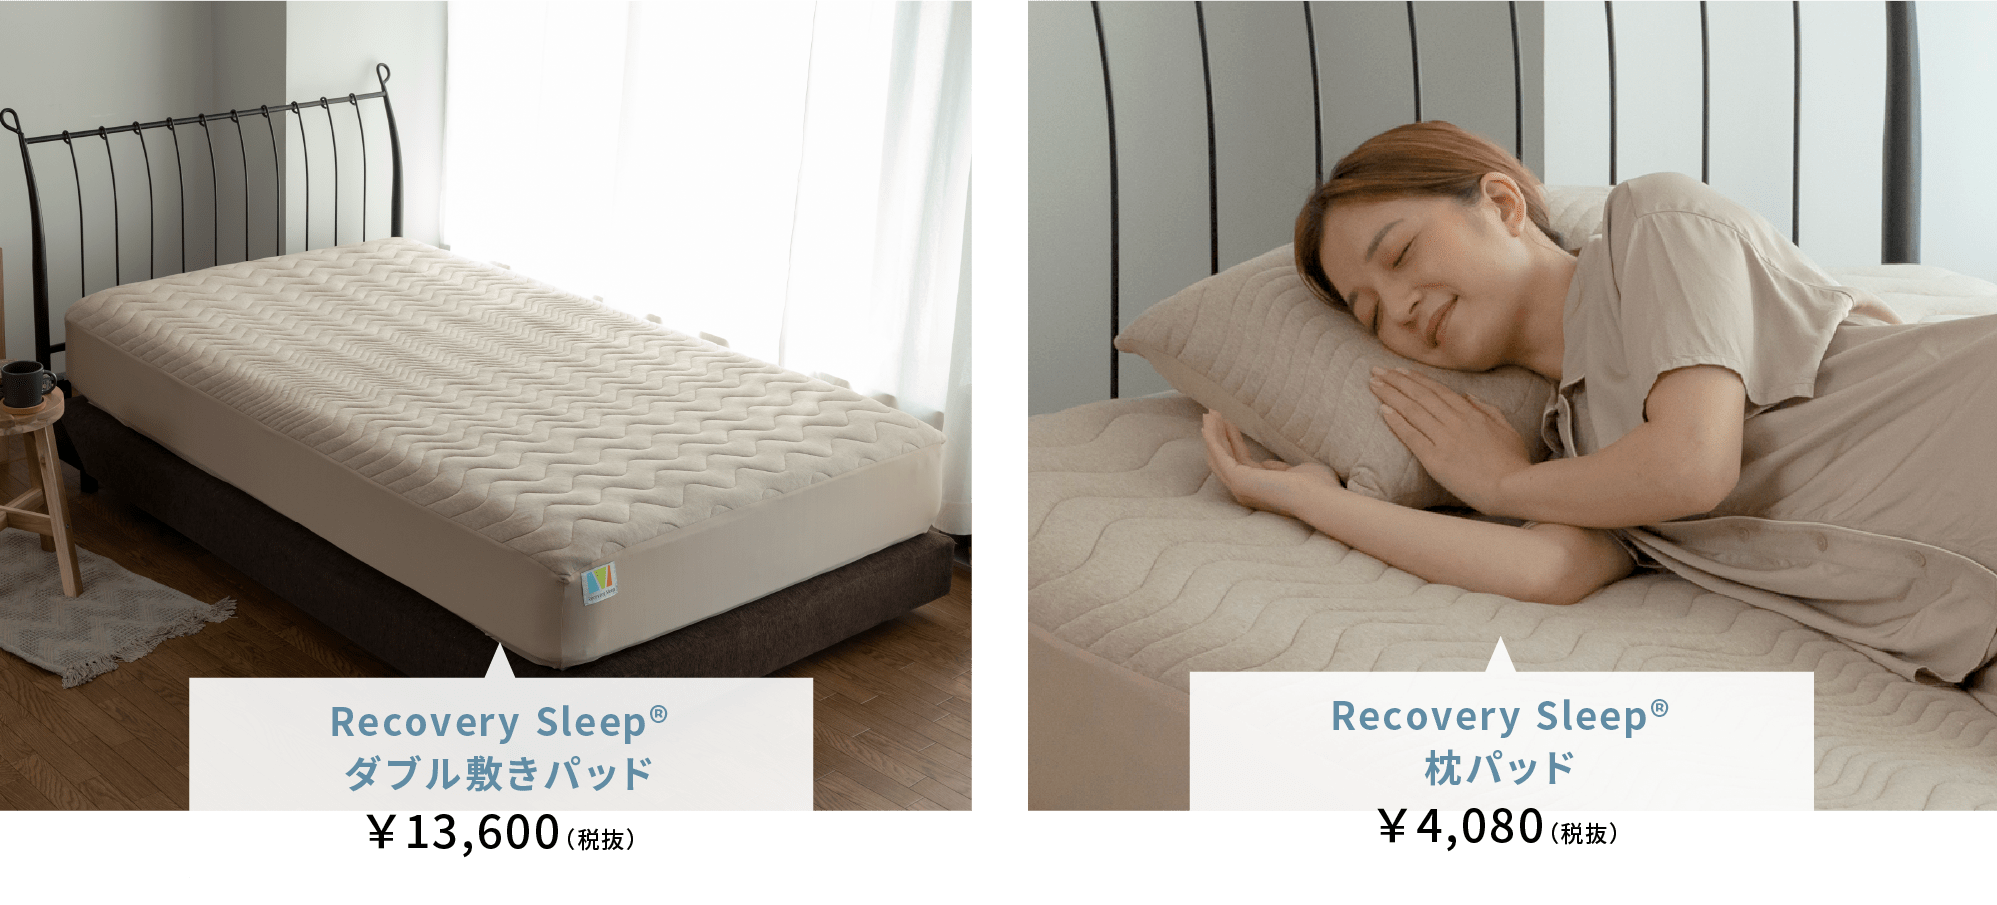 Recovery Sleep®シングル敷きパッド ￥9,900（税抜）Recovery Sleep®枕パッド ￥4,080（税抜）